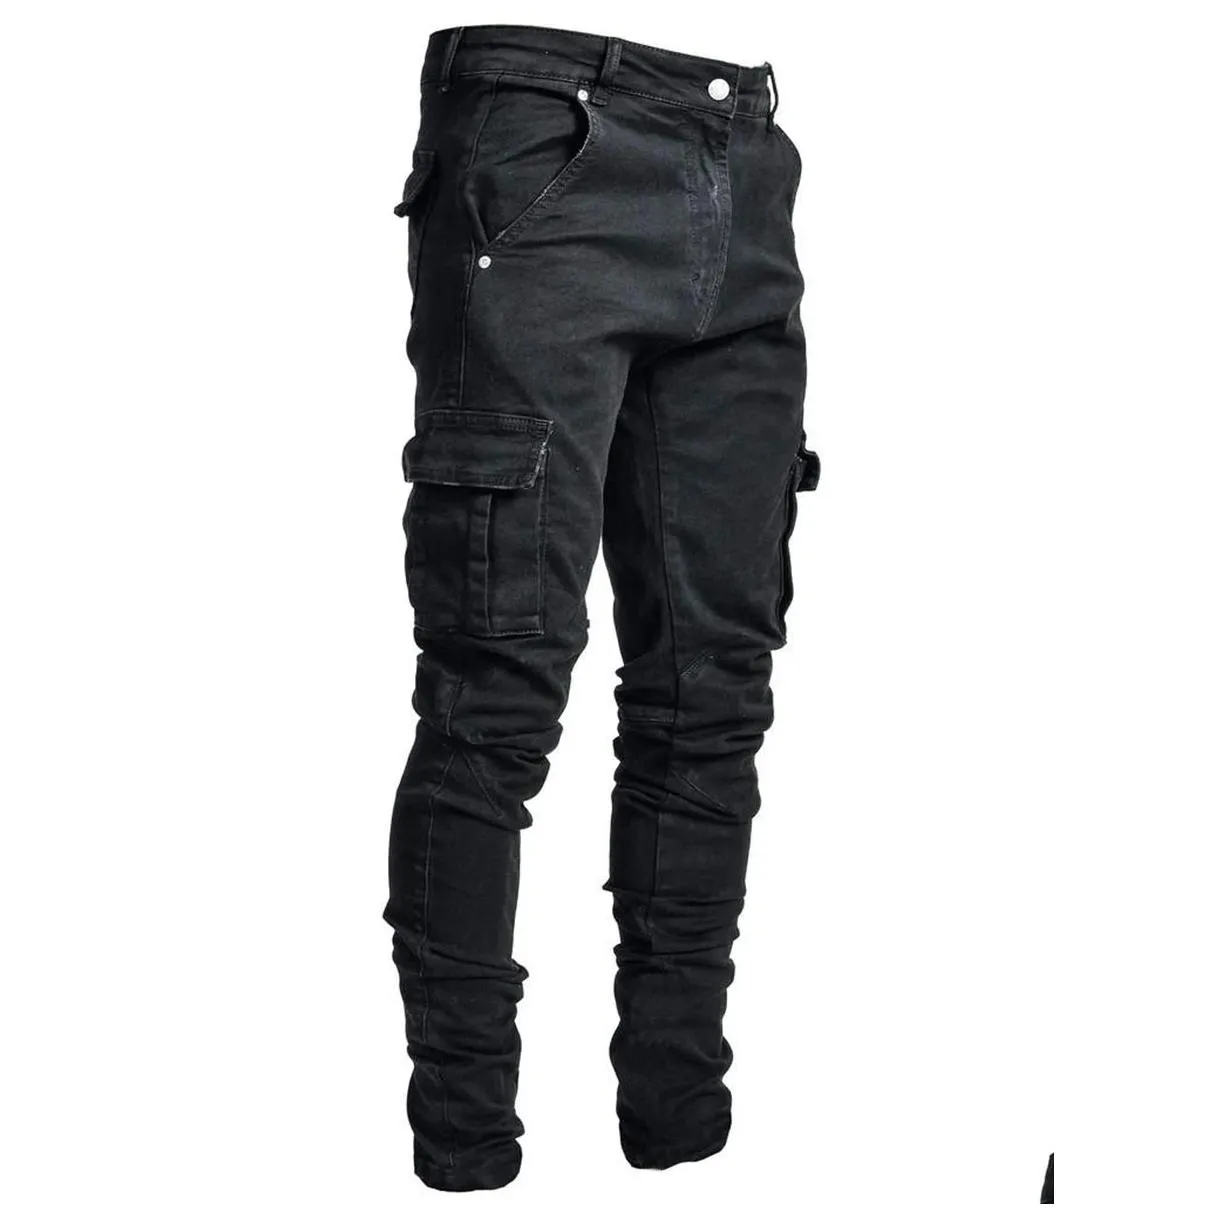 jeans male pants casual cotton denim trousers multi pocket cargo men fashion style pencil side pockets